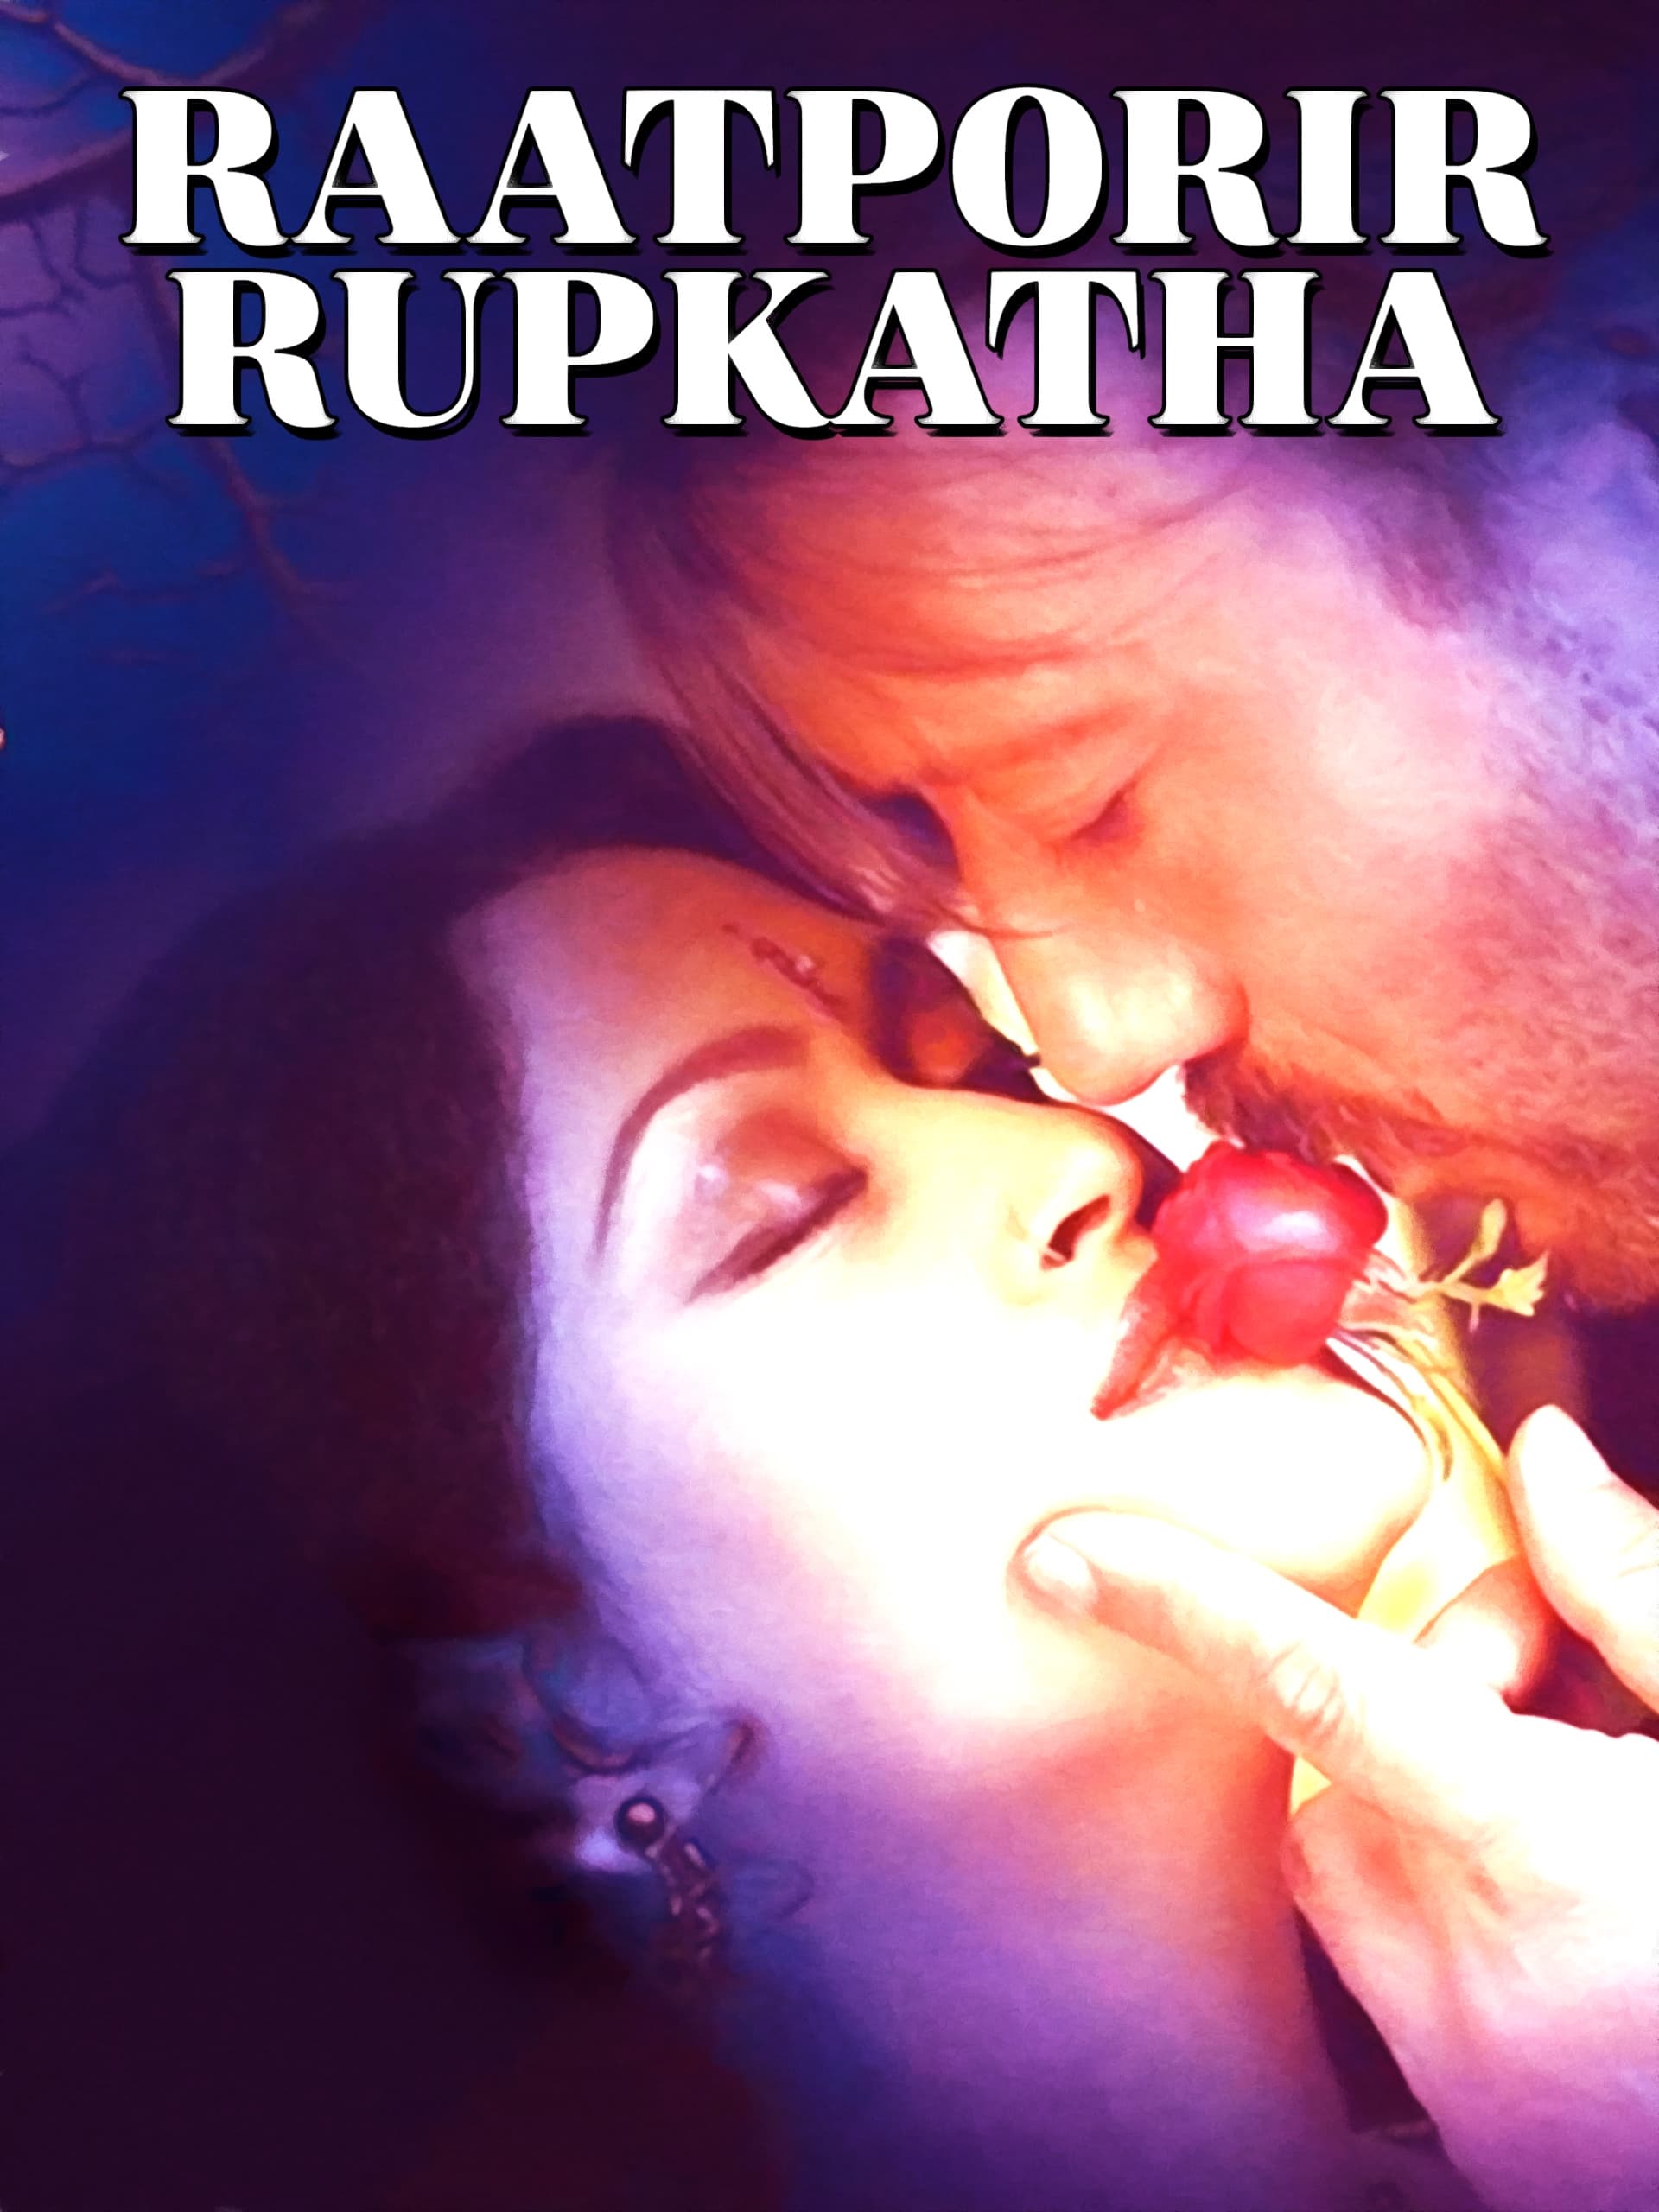 Raatporir Rupkatha (2007)